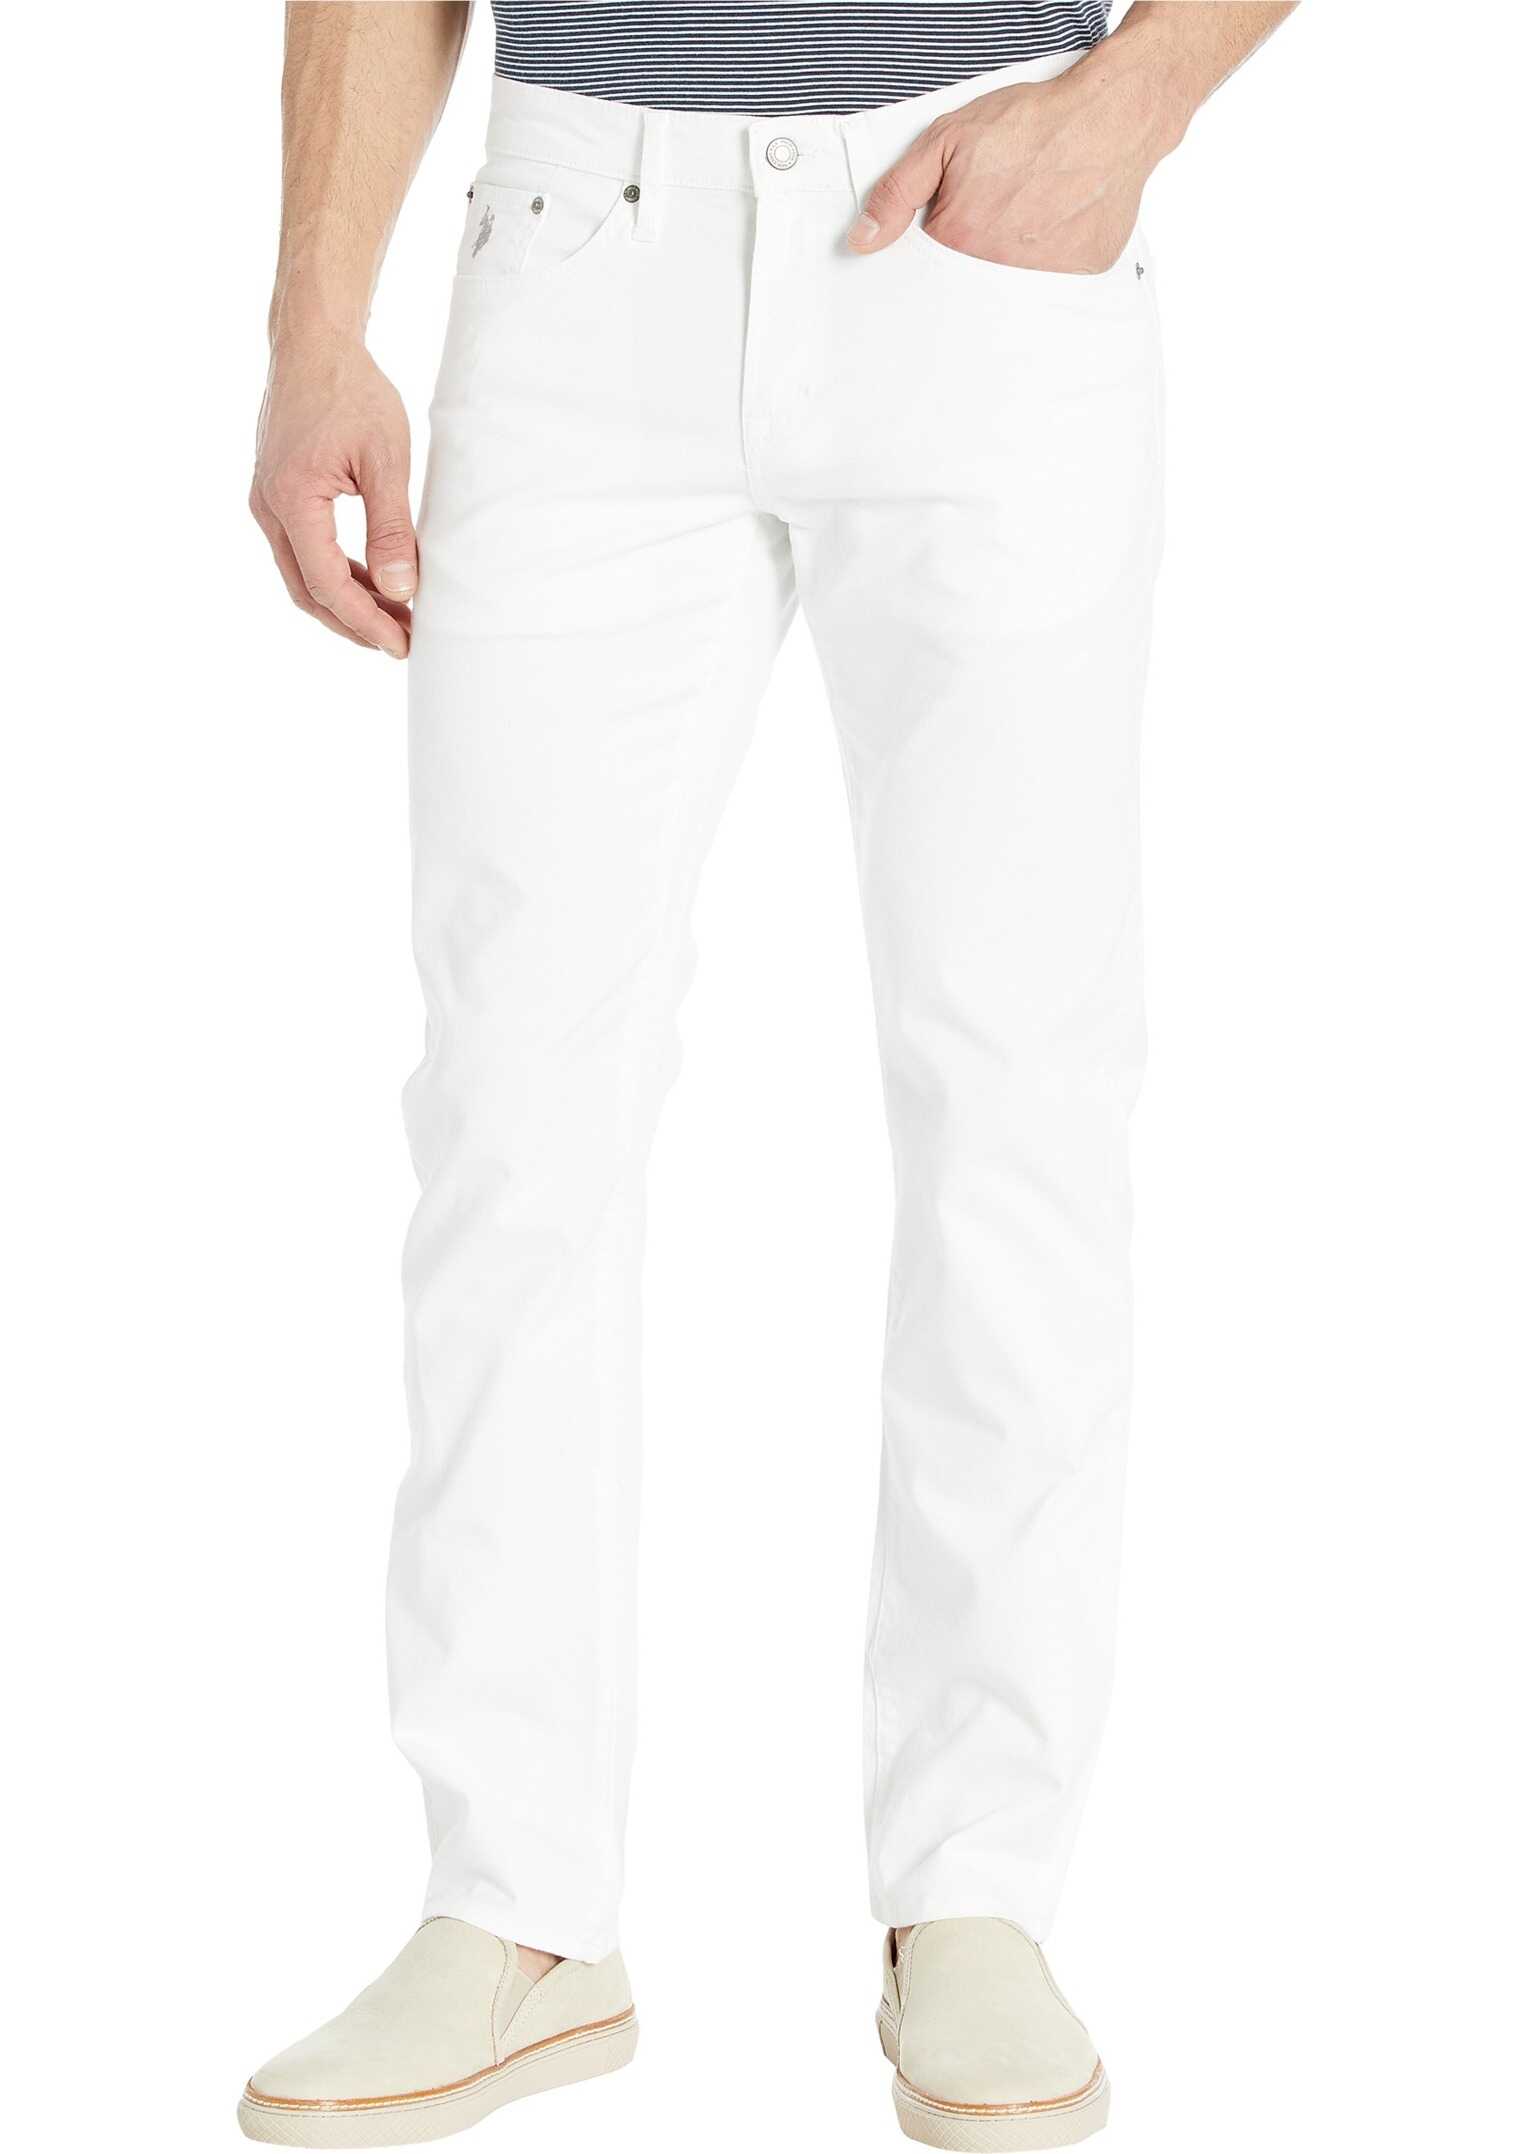 U.S. POLO ASSN. Slim Straight Stretch Five-Pocket Pants White